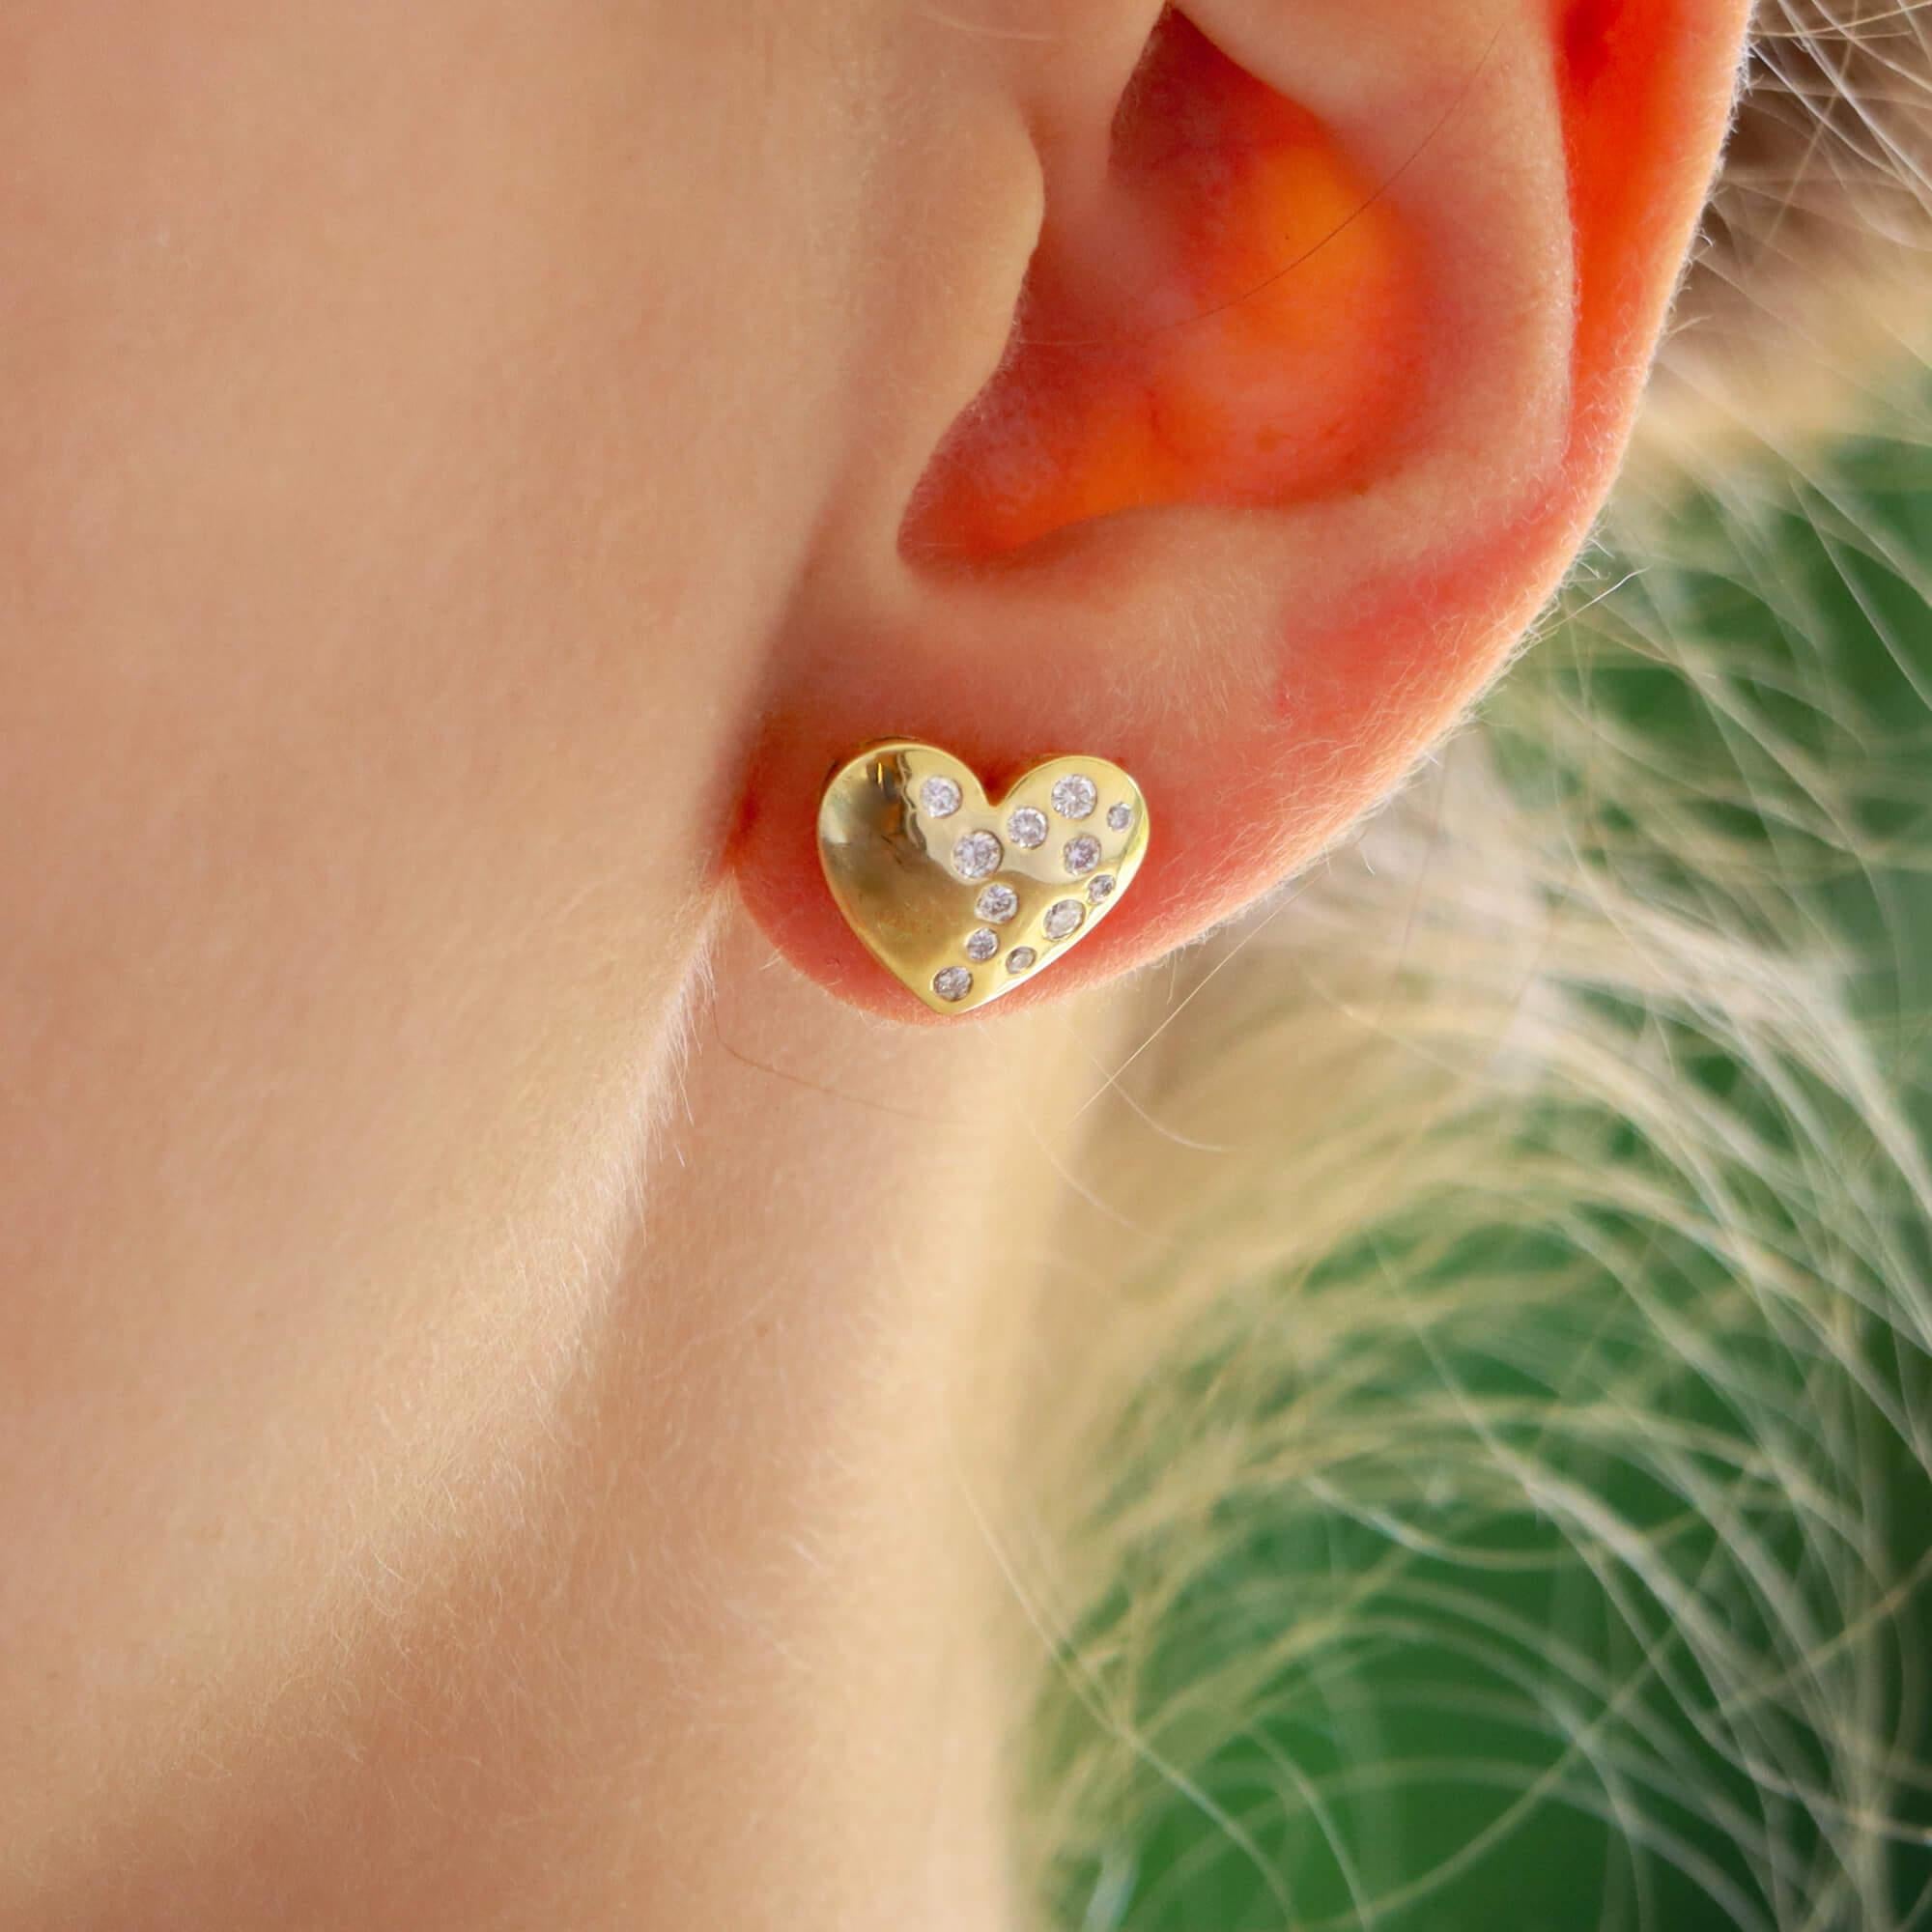 contemporary diamond earrings